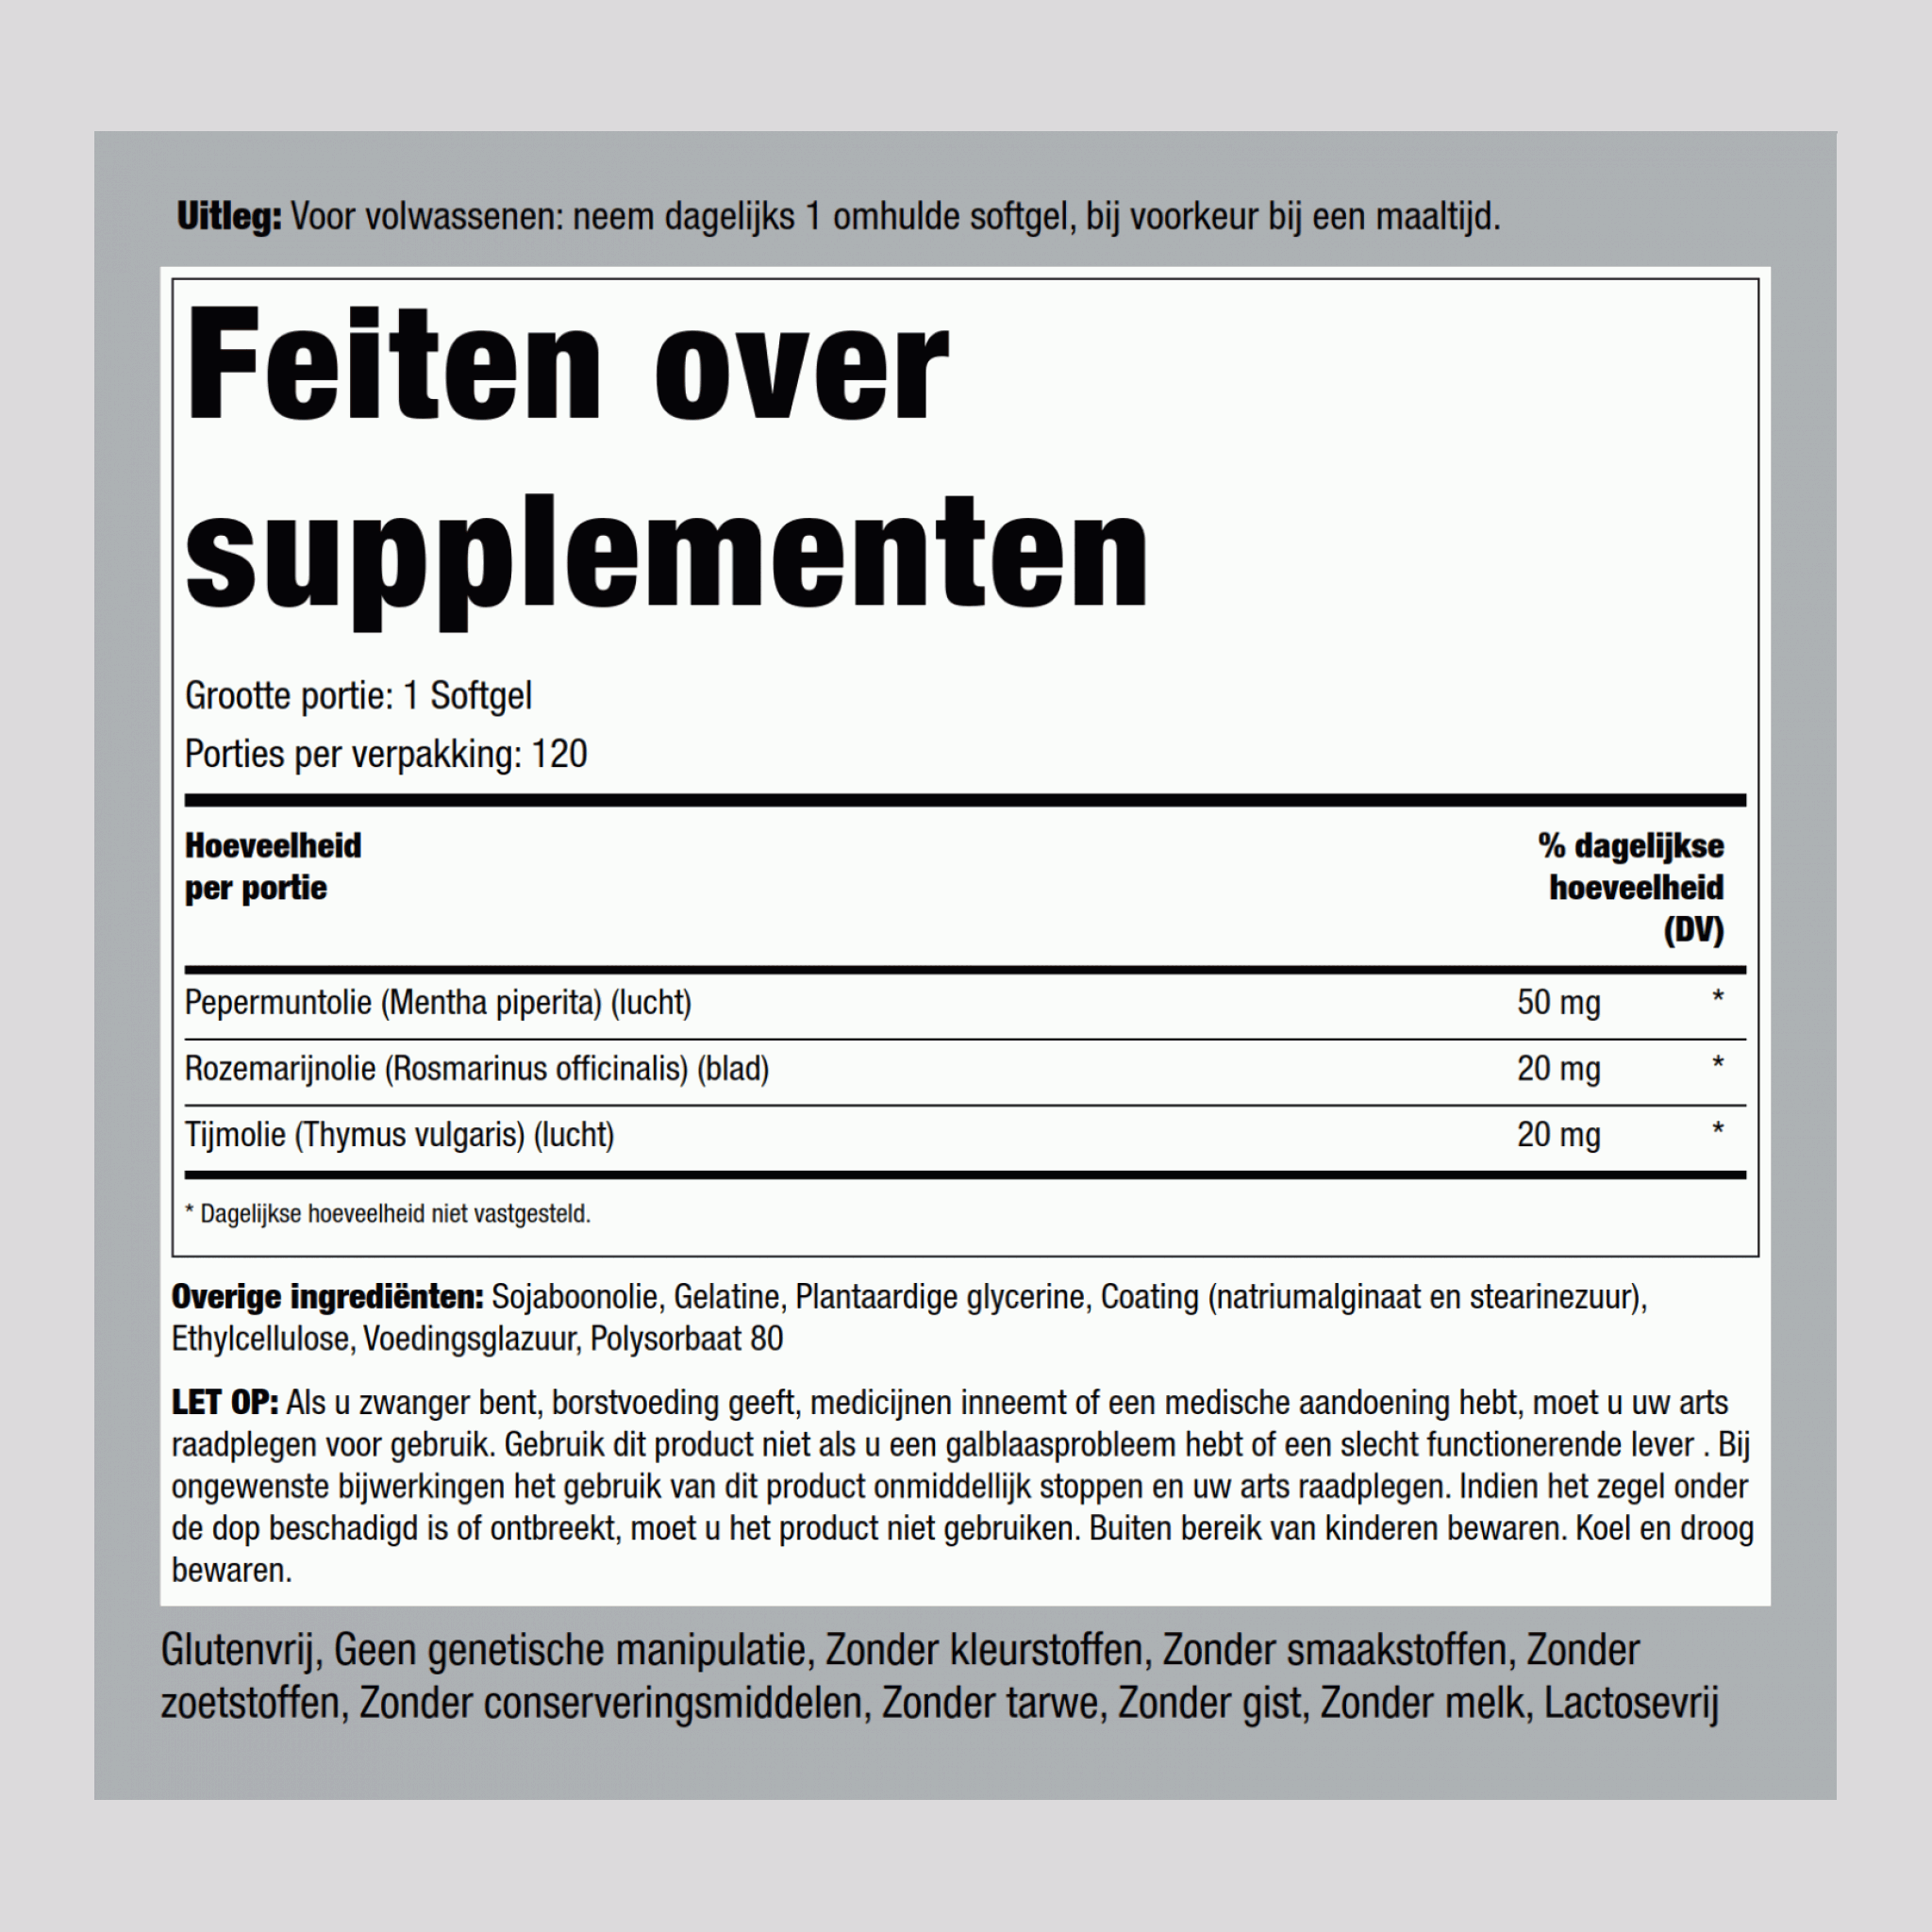 Ultra pepermuntolie (enterisch bekleed) 50 mg 120 Omhulde softgels     